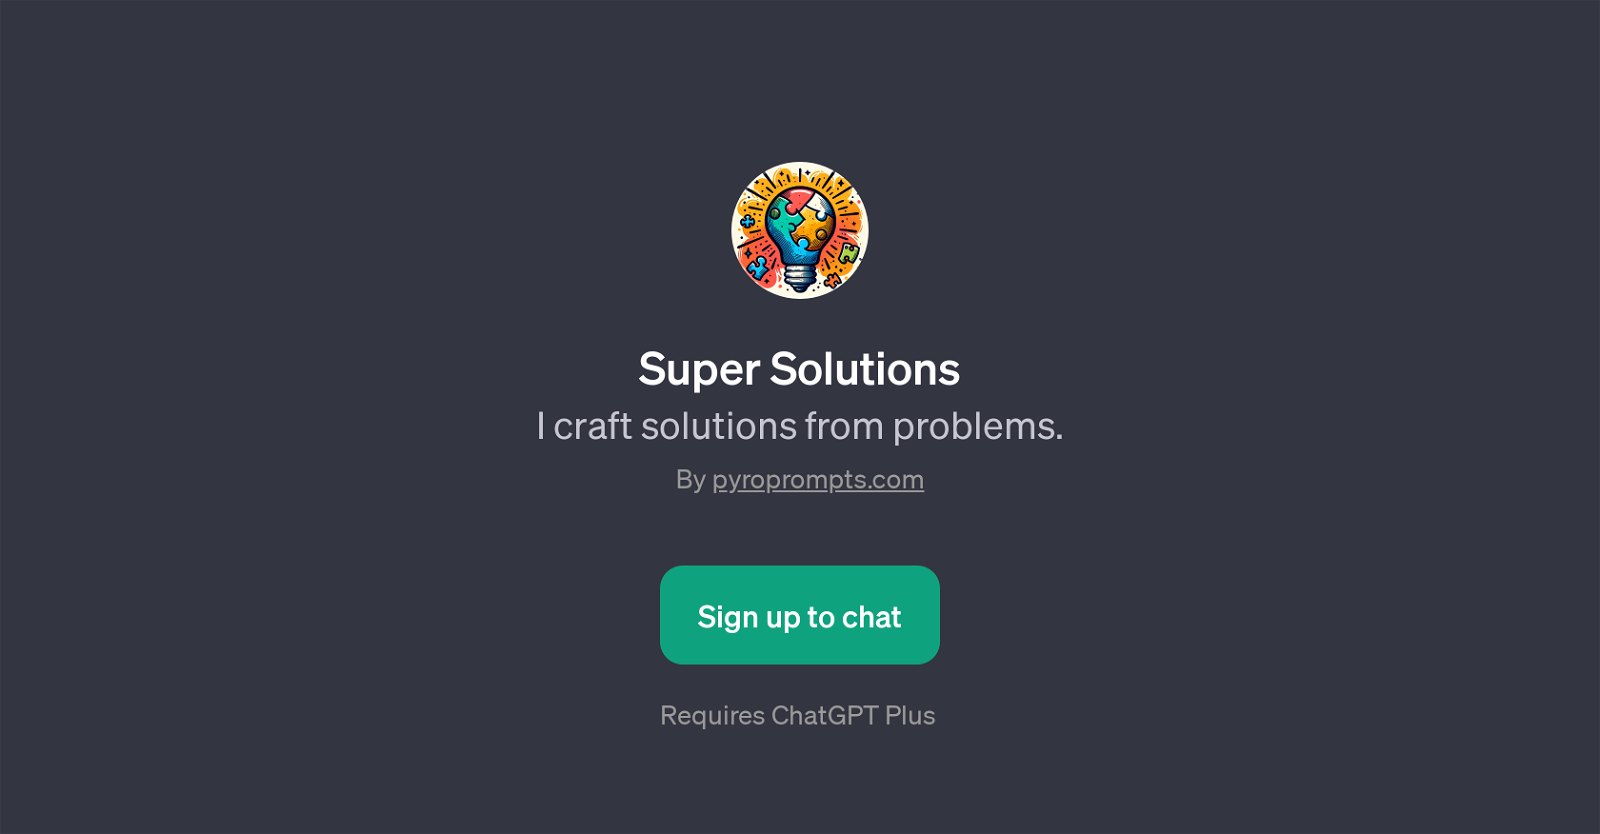 Super Solutions website